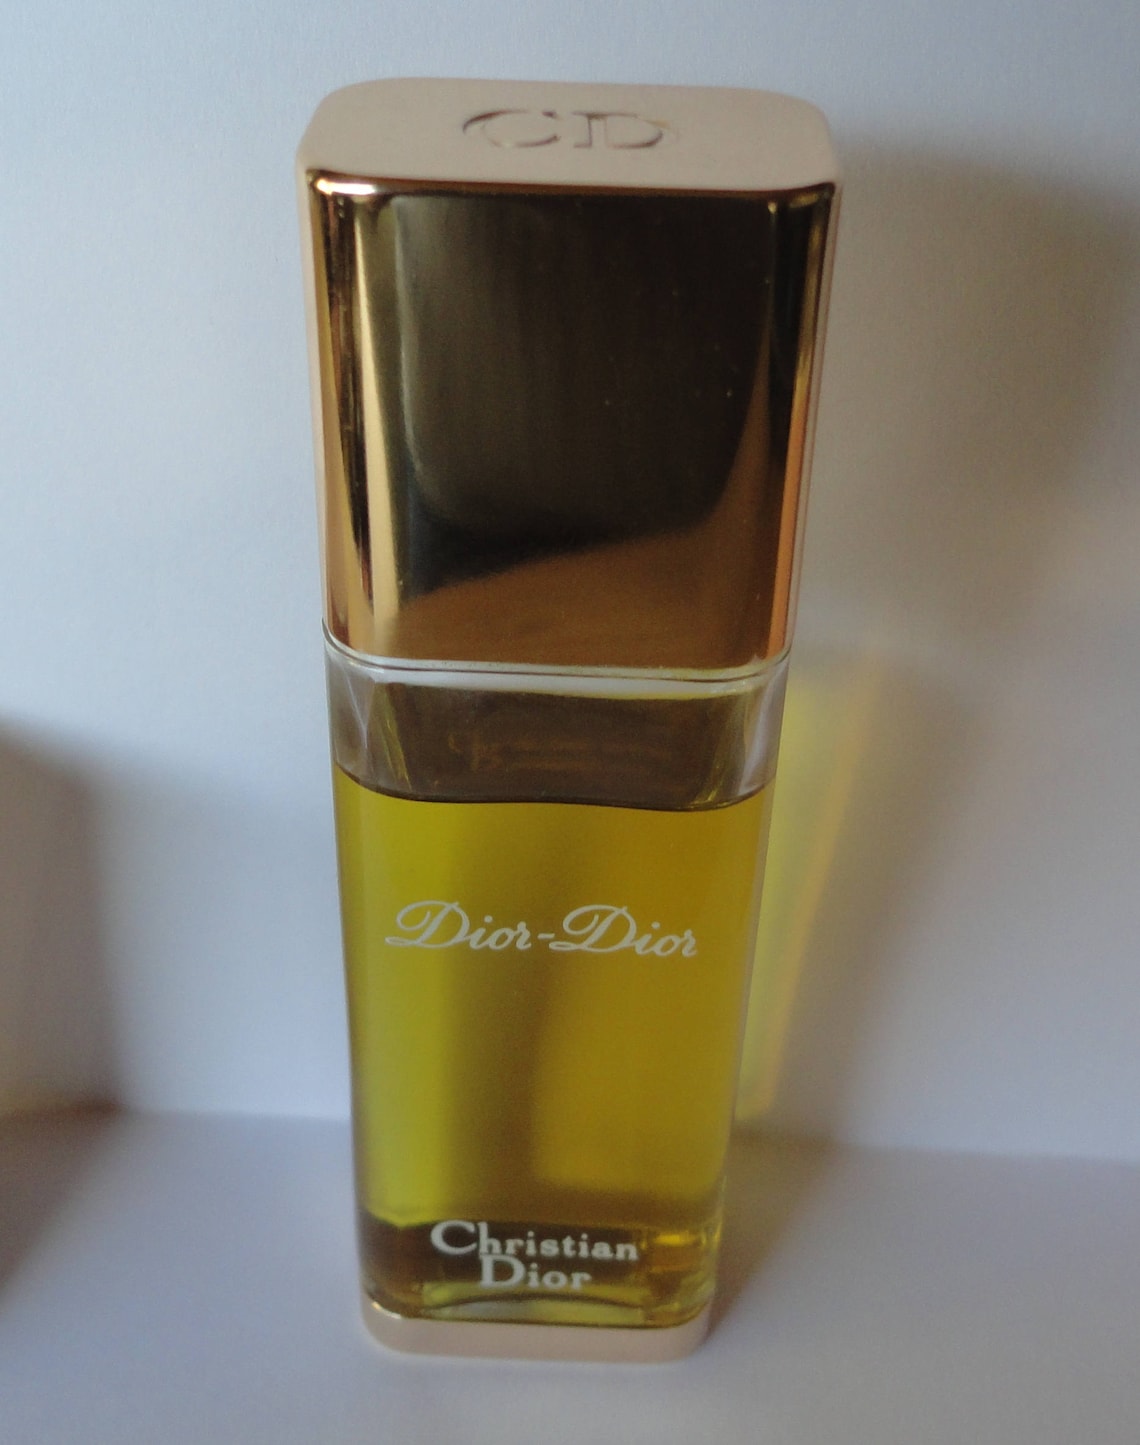 Christan Dior Dior Dior pure parfum 30ml | Etsy